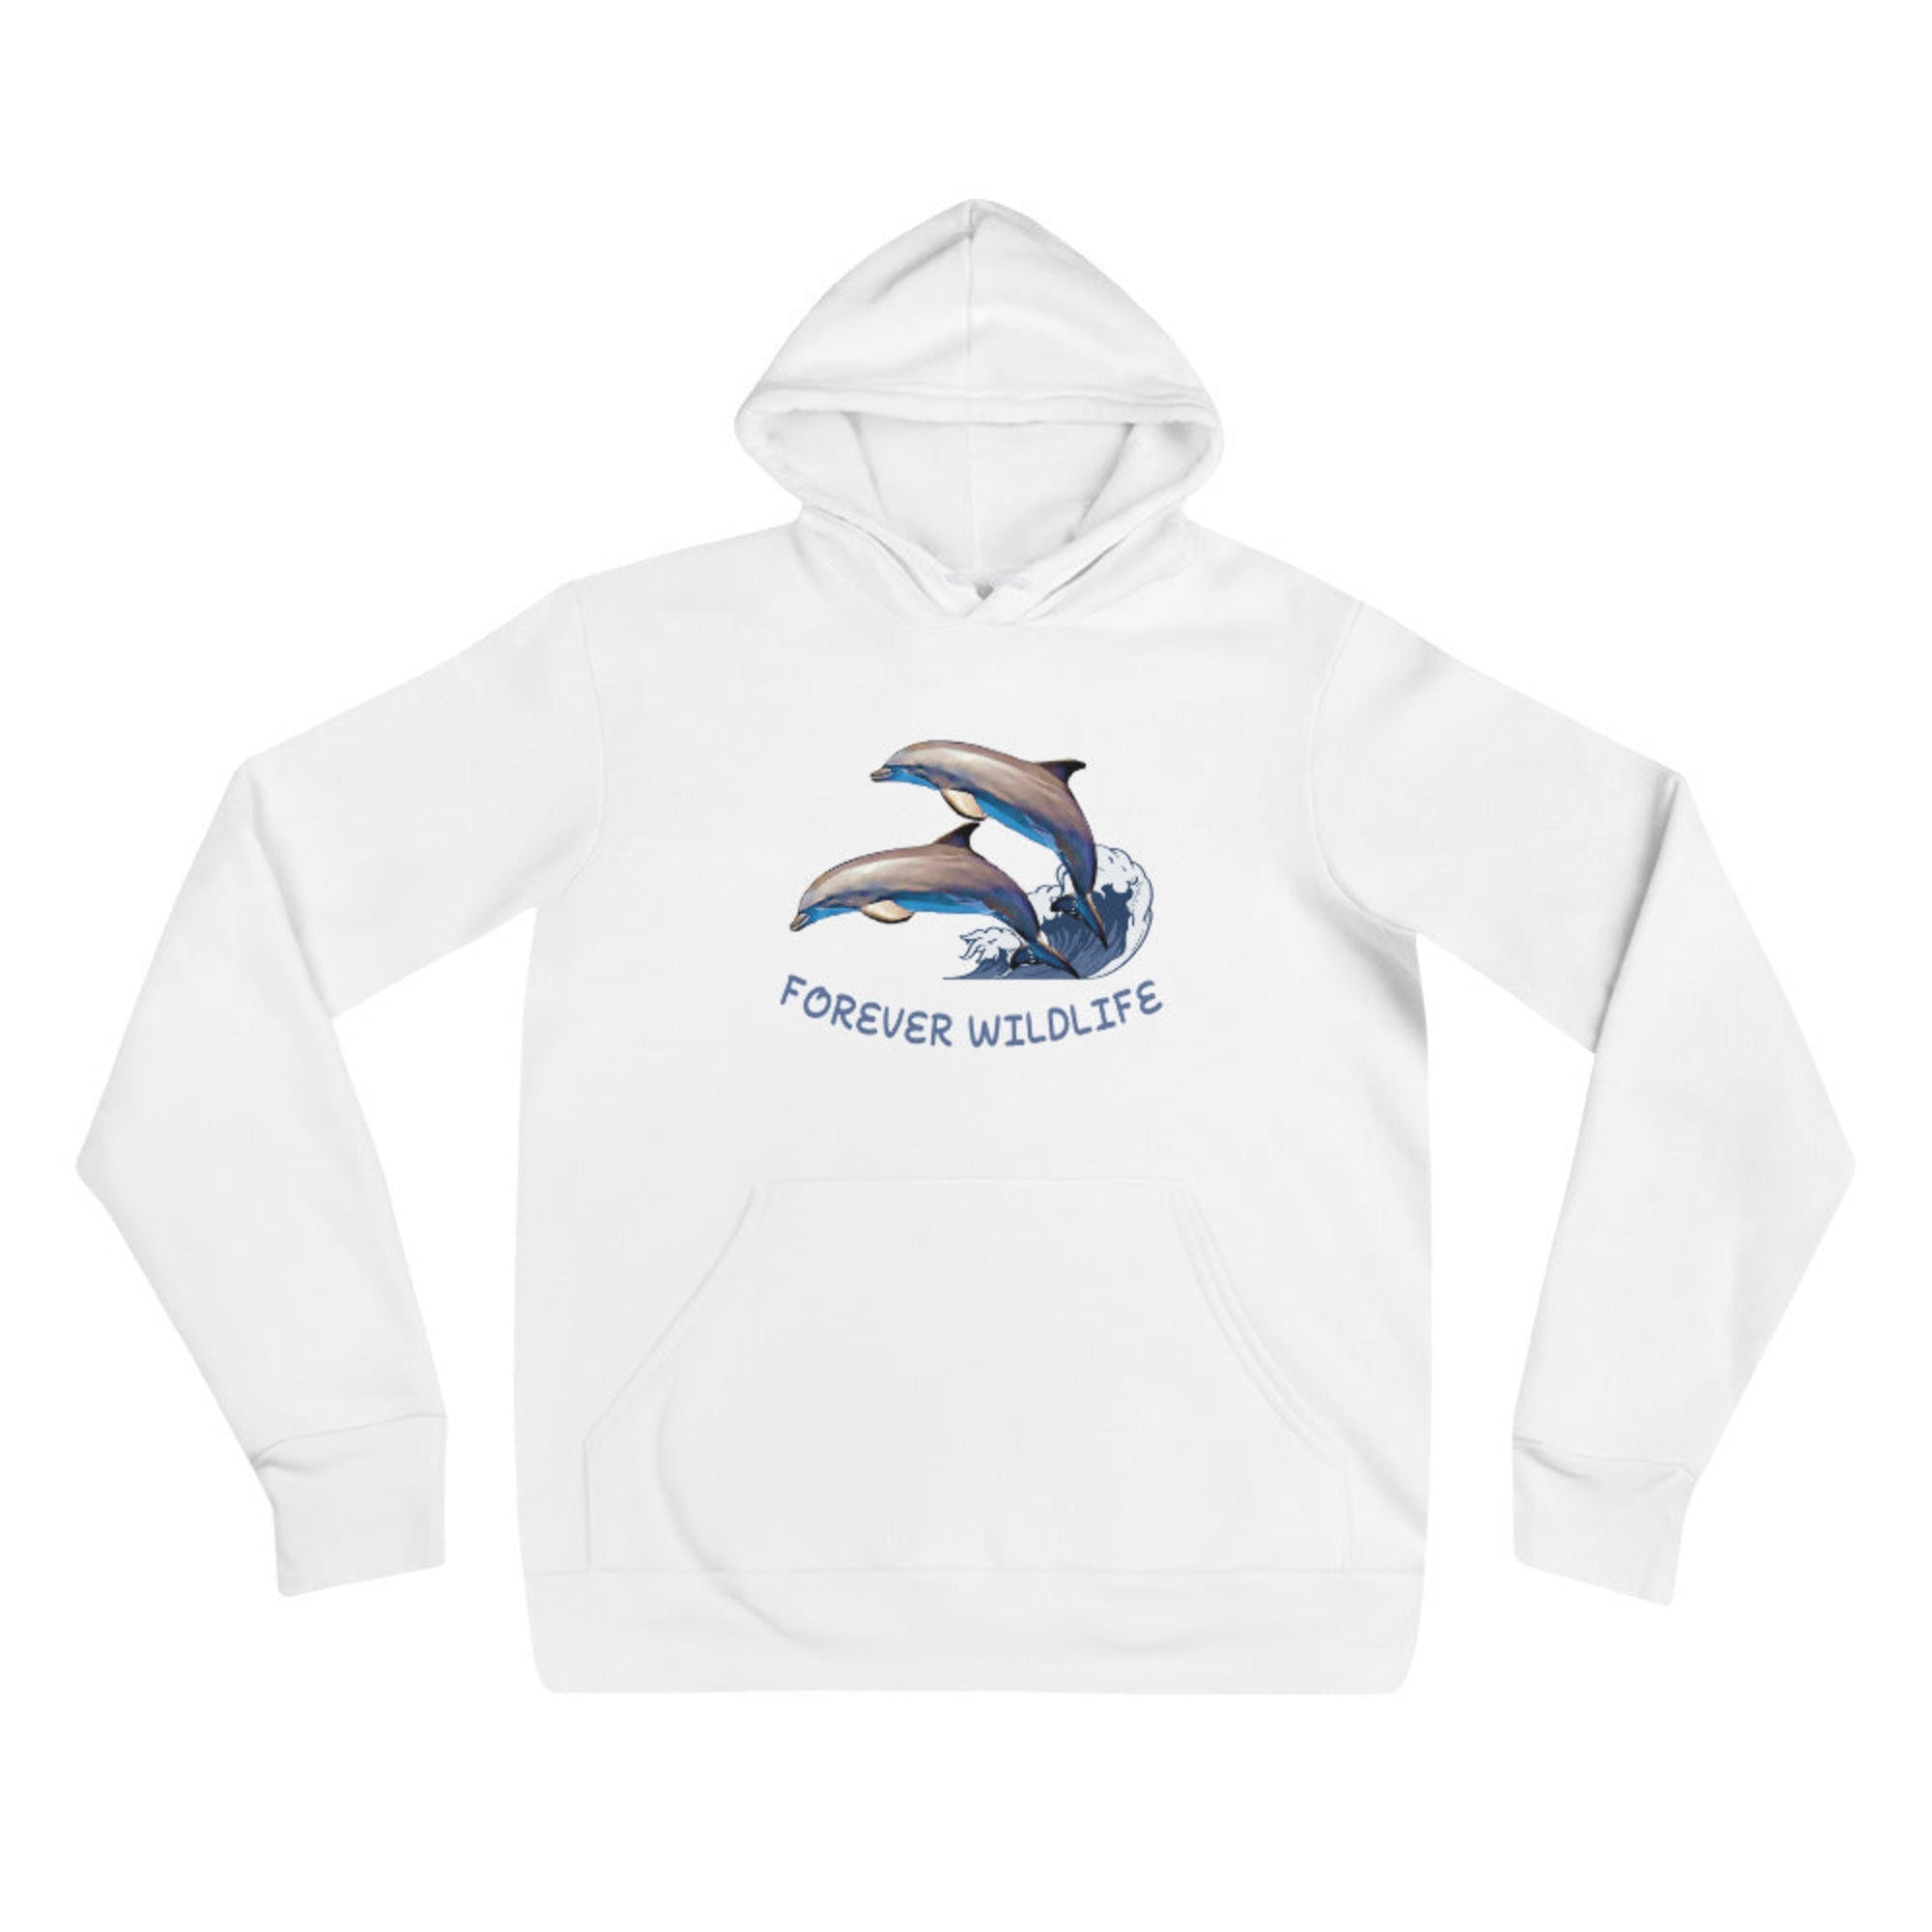 Dolphin Hoodie in White – Premium Wildlife Animal Inspirational Hoodie Design, part of Wildlife Hoodies & Clothing from Forever Wildlife